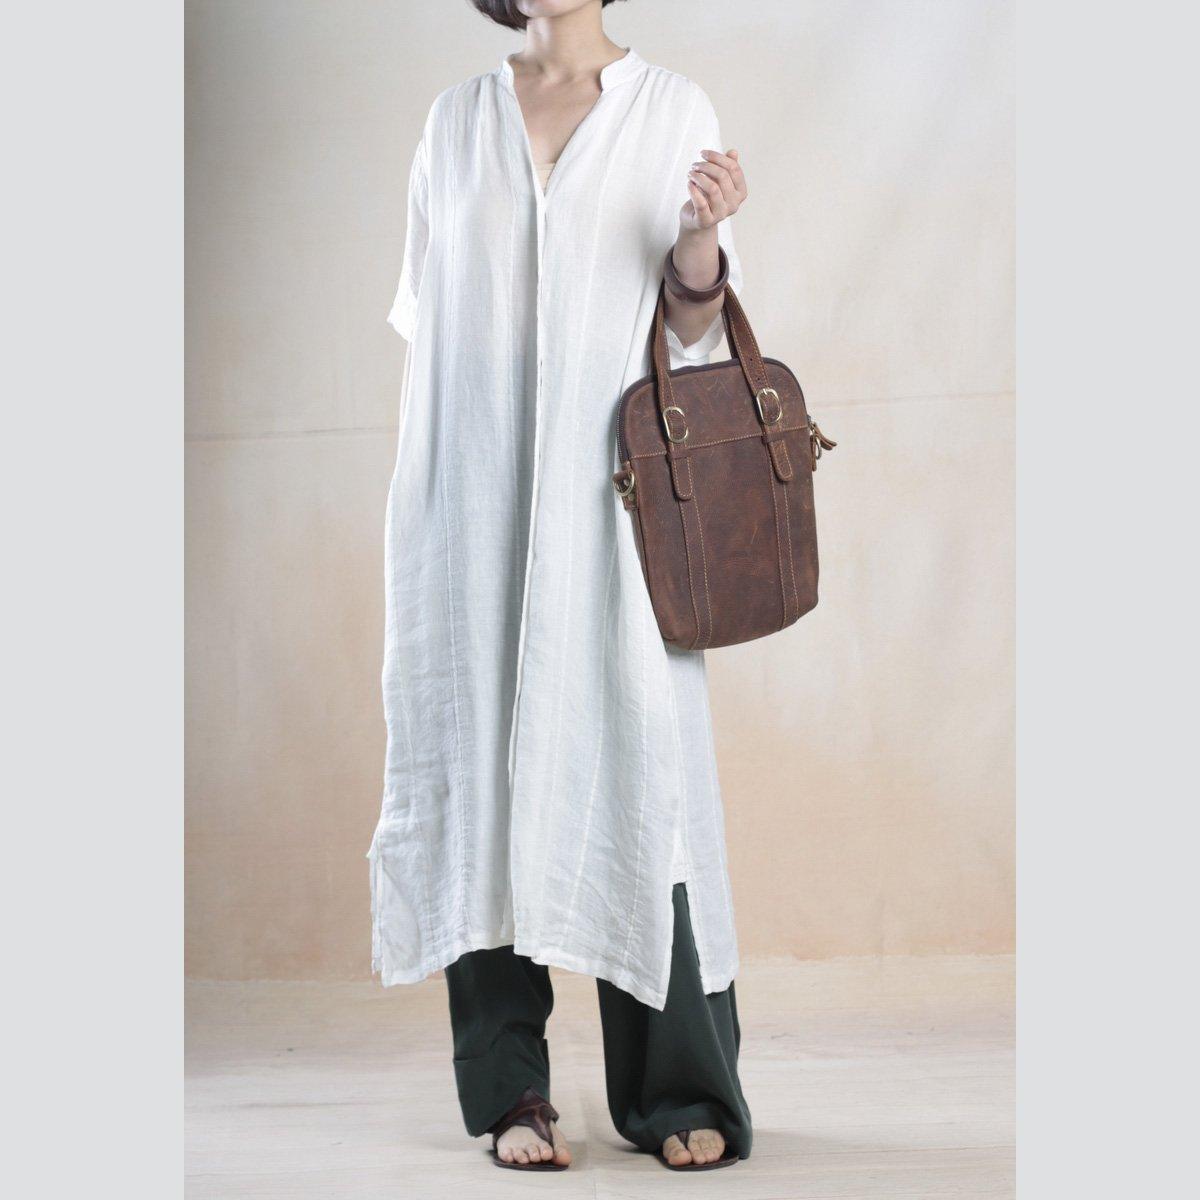 White linen shirt dress long summer maxi dresses caftans - Omychic